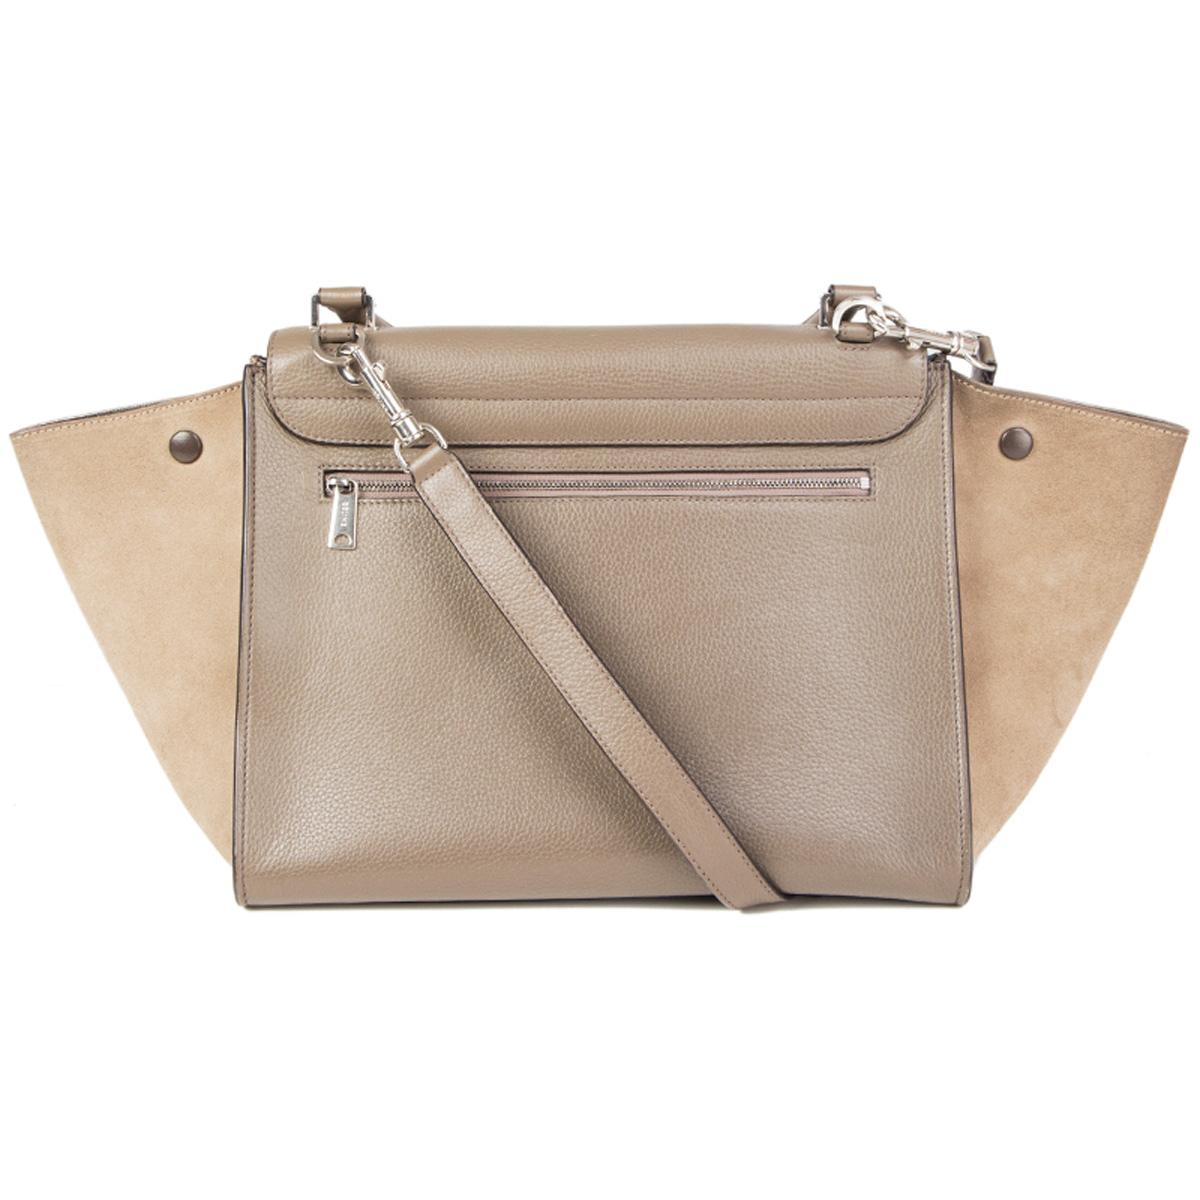 Beige CELINE beige & taupe leather & suede TRAPEZE SMALL Shoulder Bag